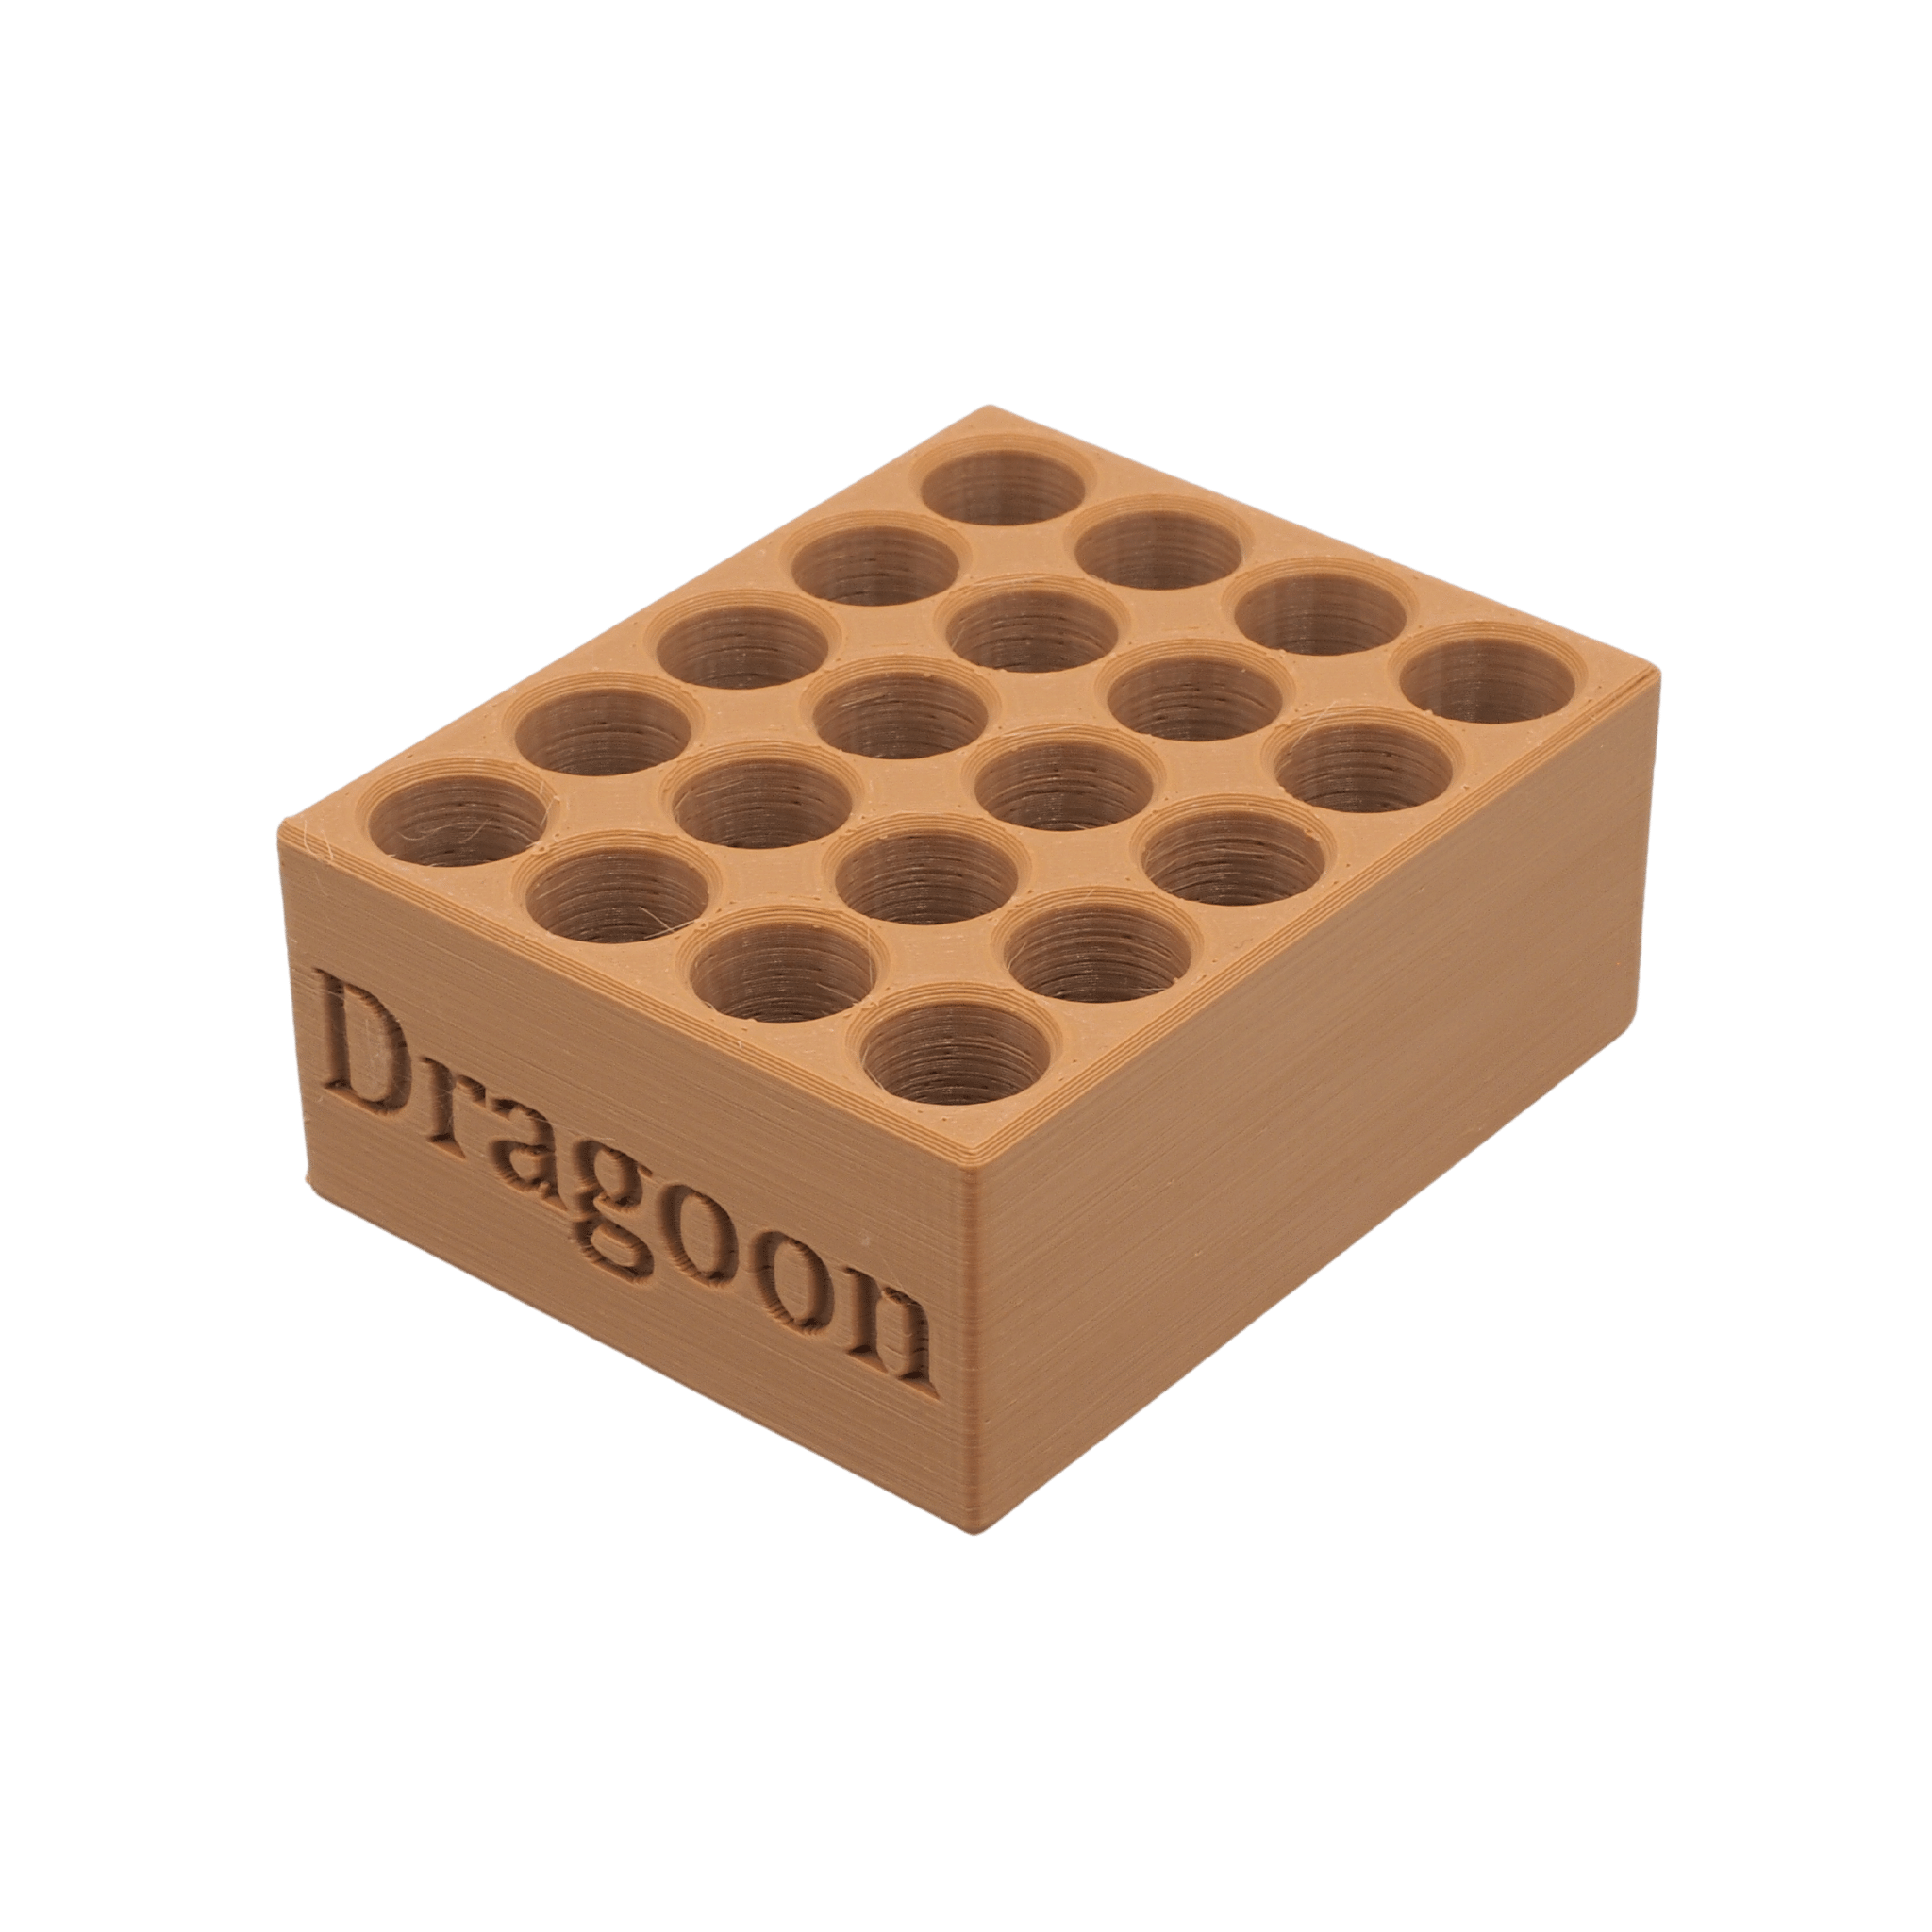 Dragoon Paper Cartridge Loading Block